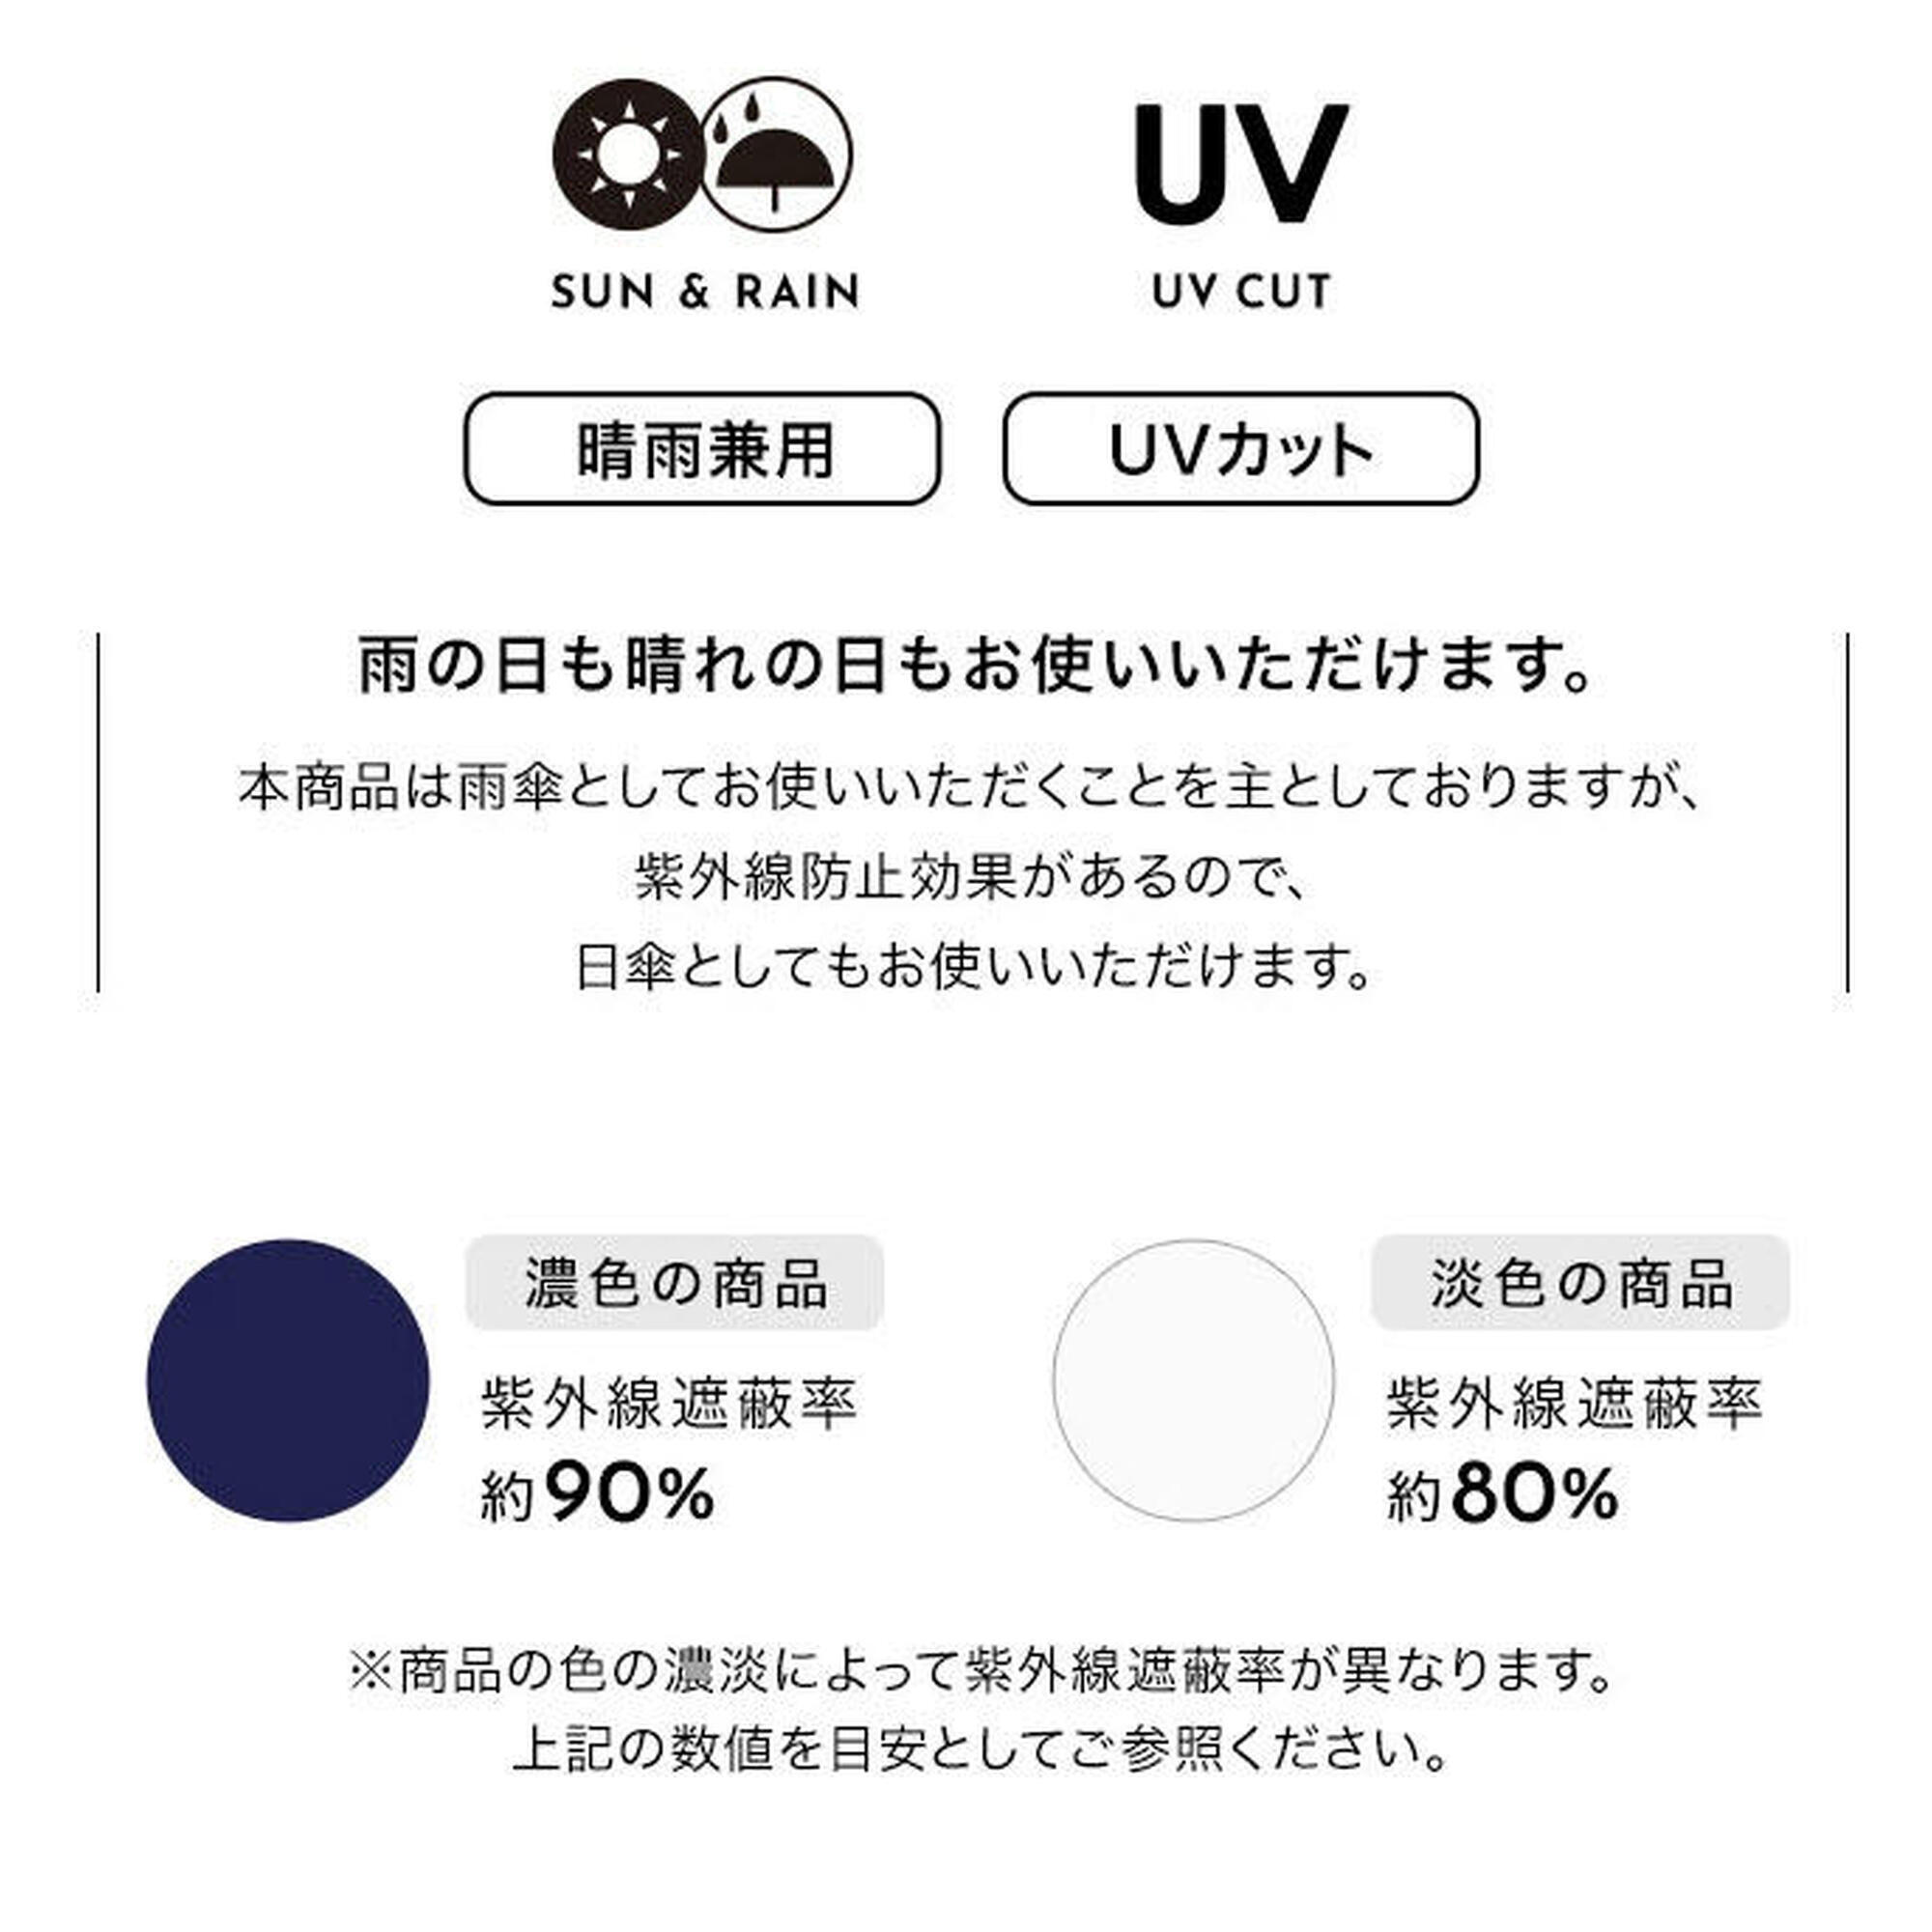 UX Series Couple Folding Umbrella - Khaki/Black